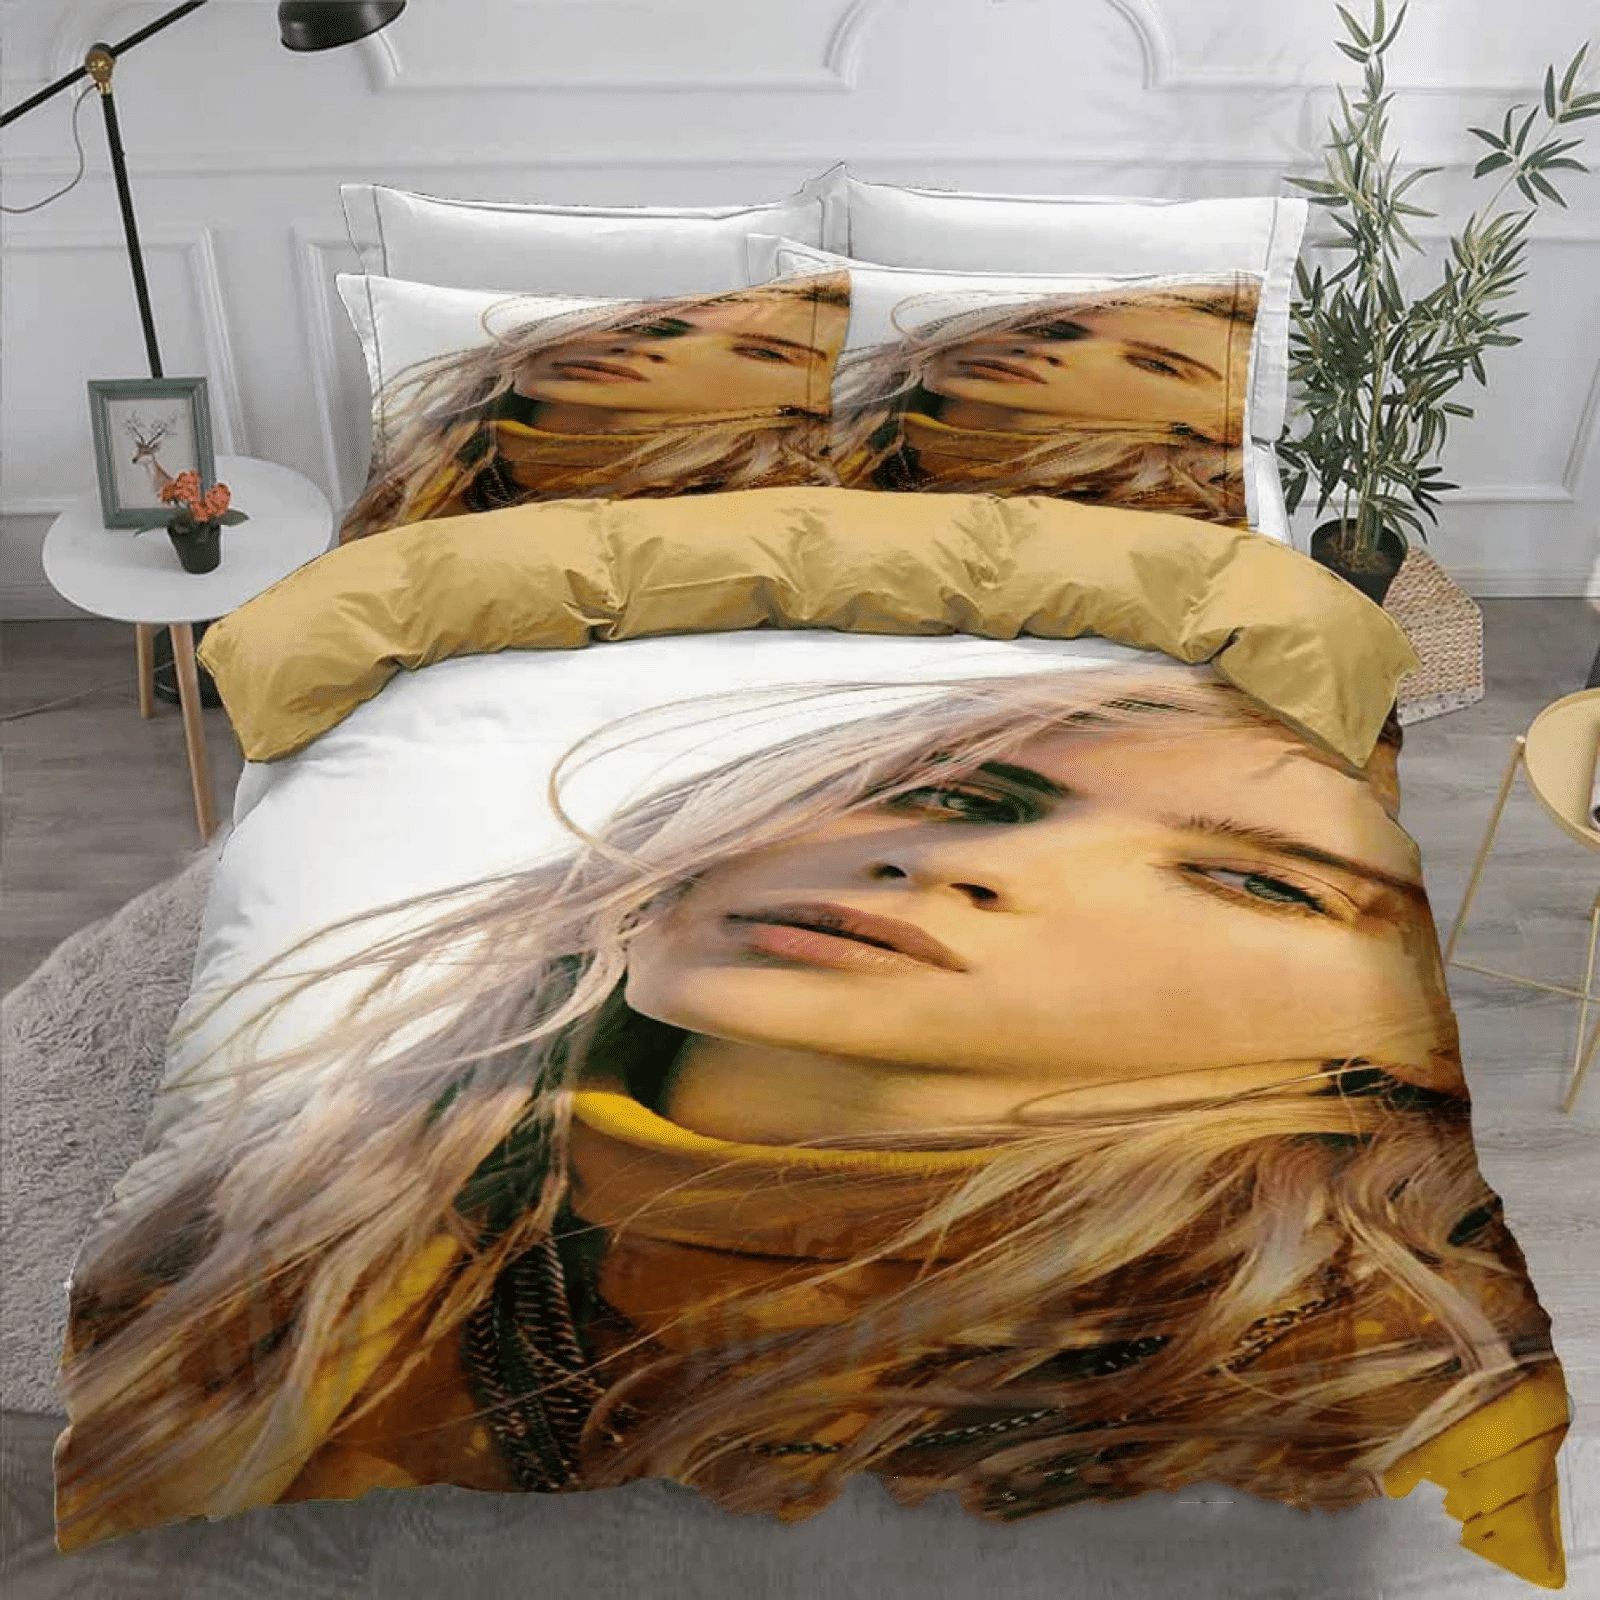 Billie Eilish Bellyache 48 Duvet Cover Pillowcase Bedding Sets Home